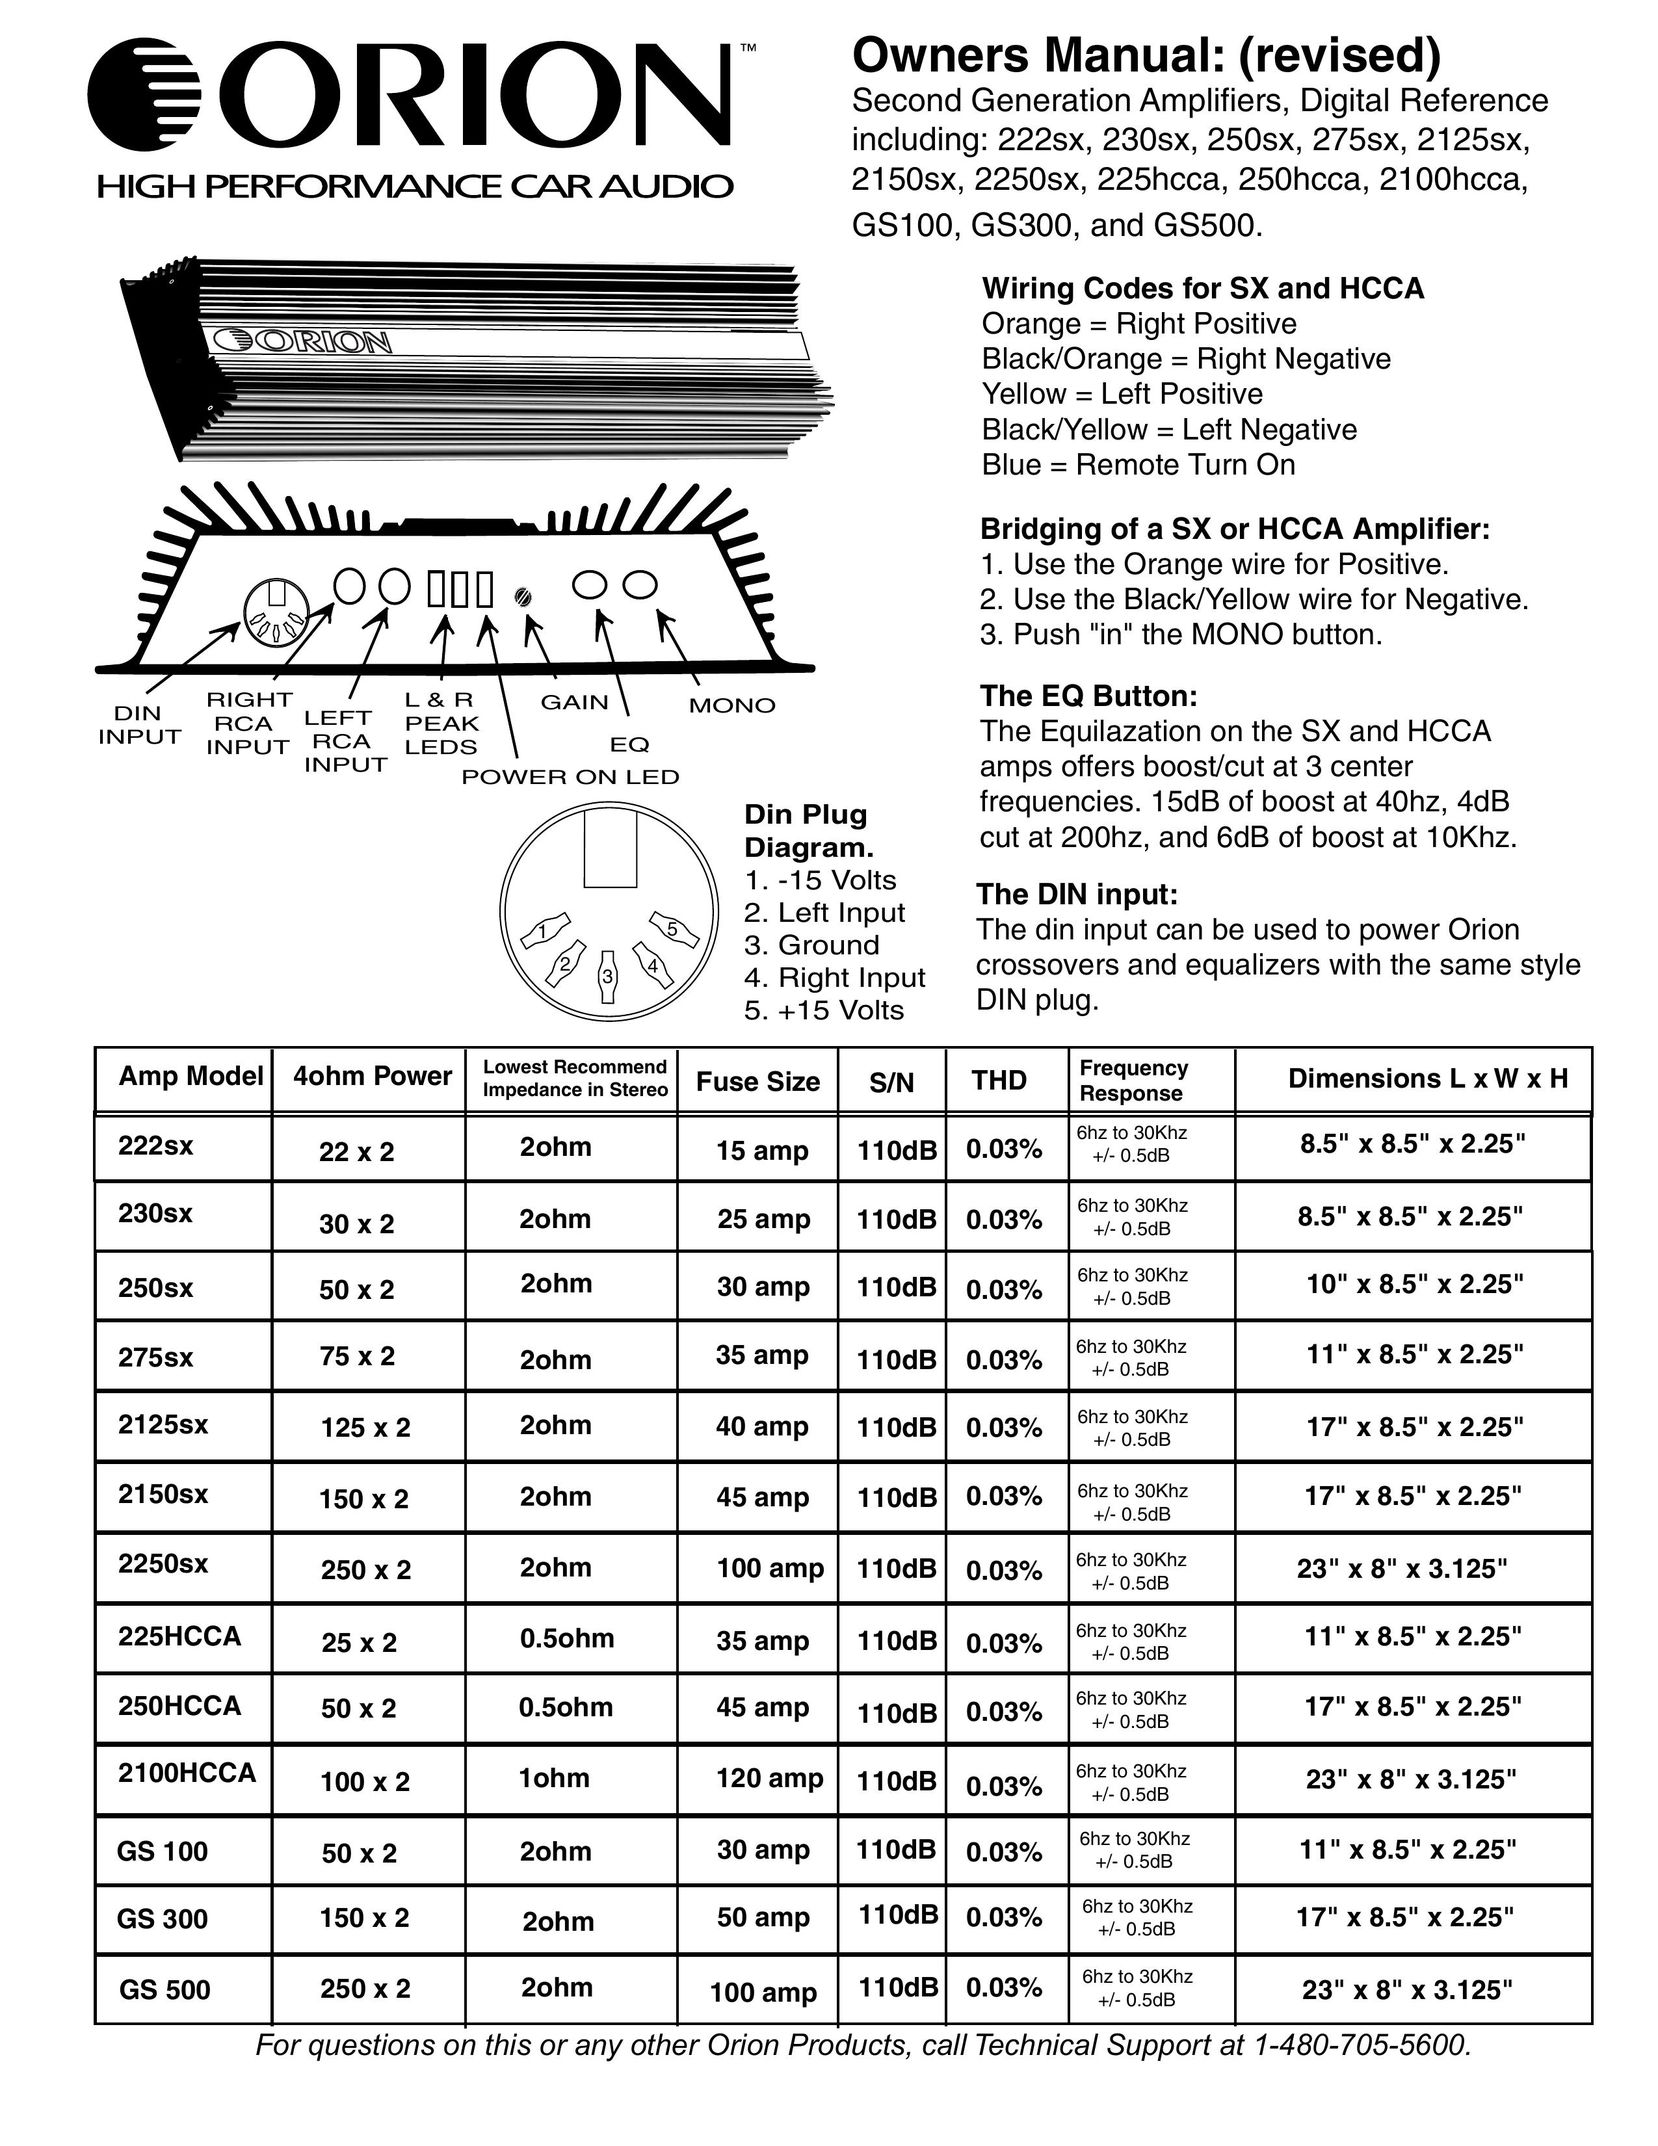 Orion Car Audio GS300 Car Amplifier User Manual